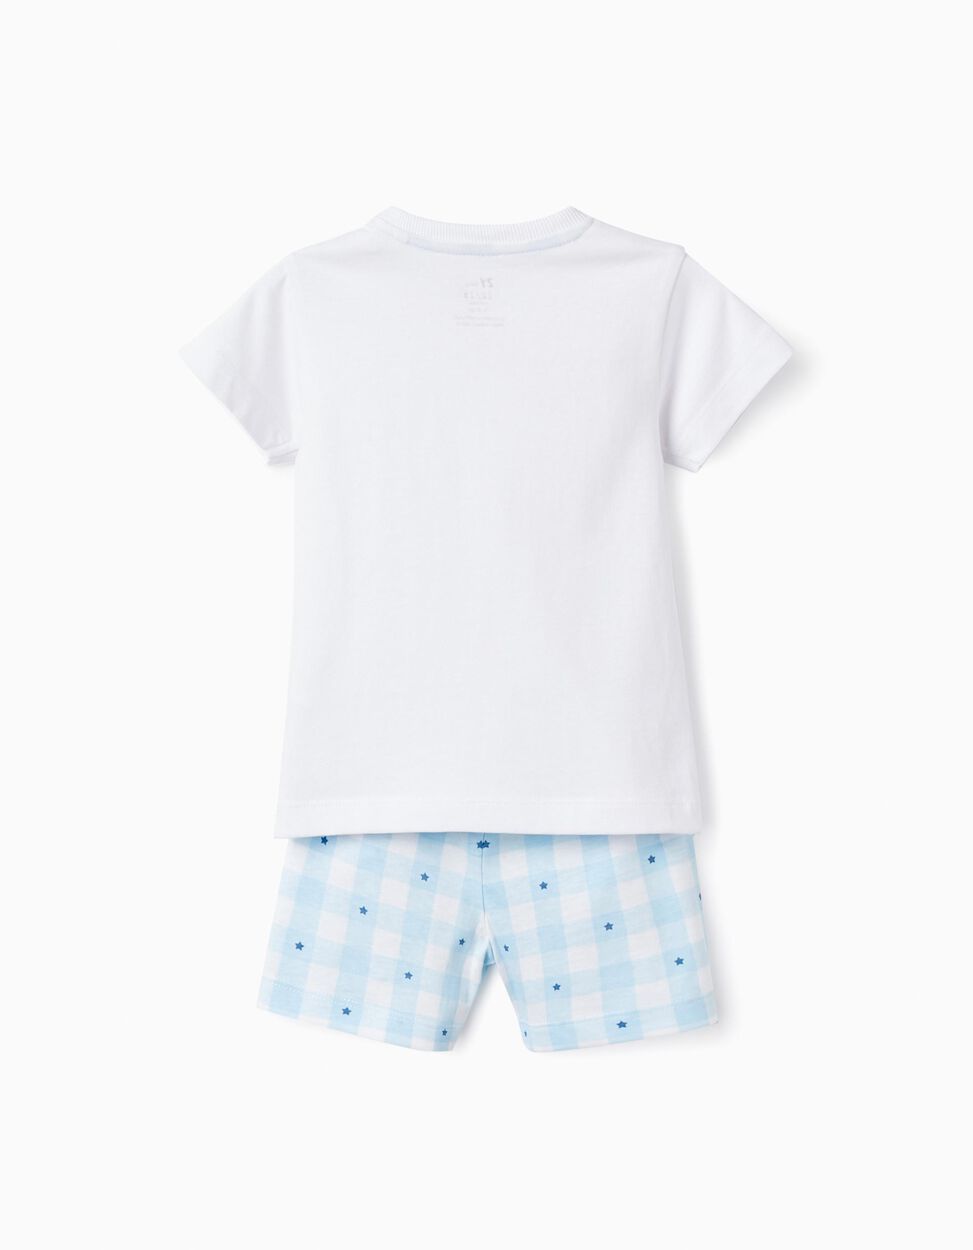 Buy Online Pyjama in Cotton for Baby Boys 'Stars', White/Blue